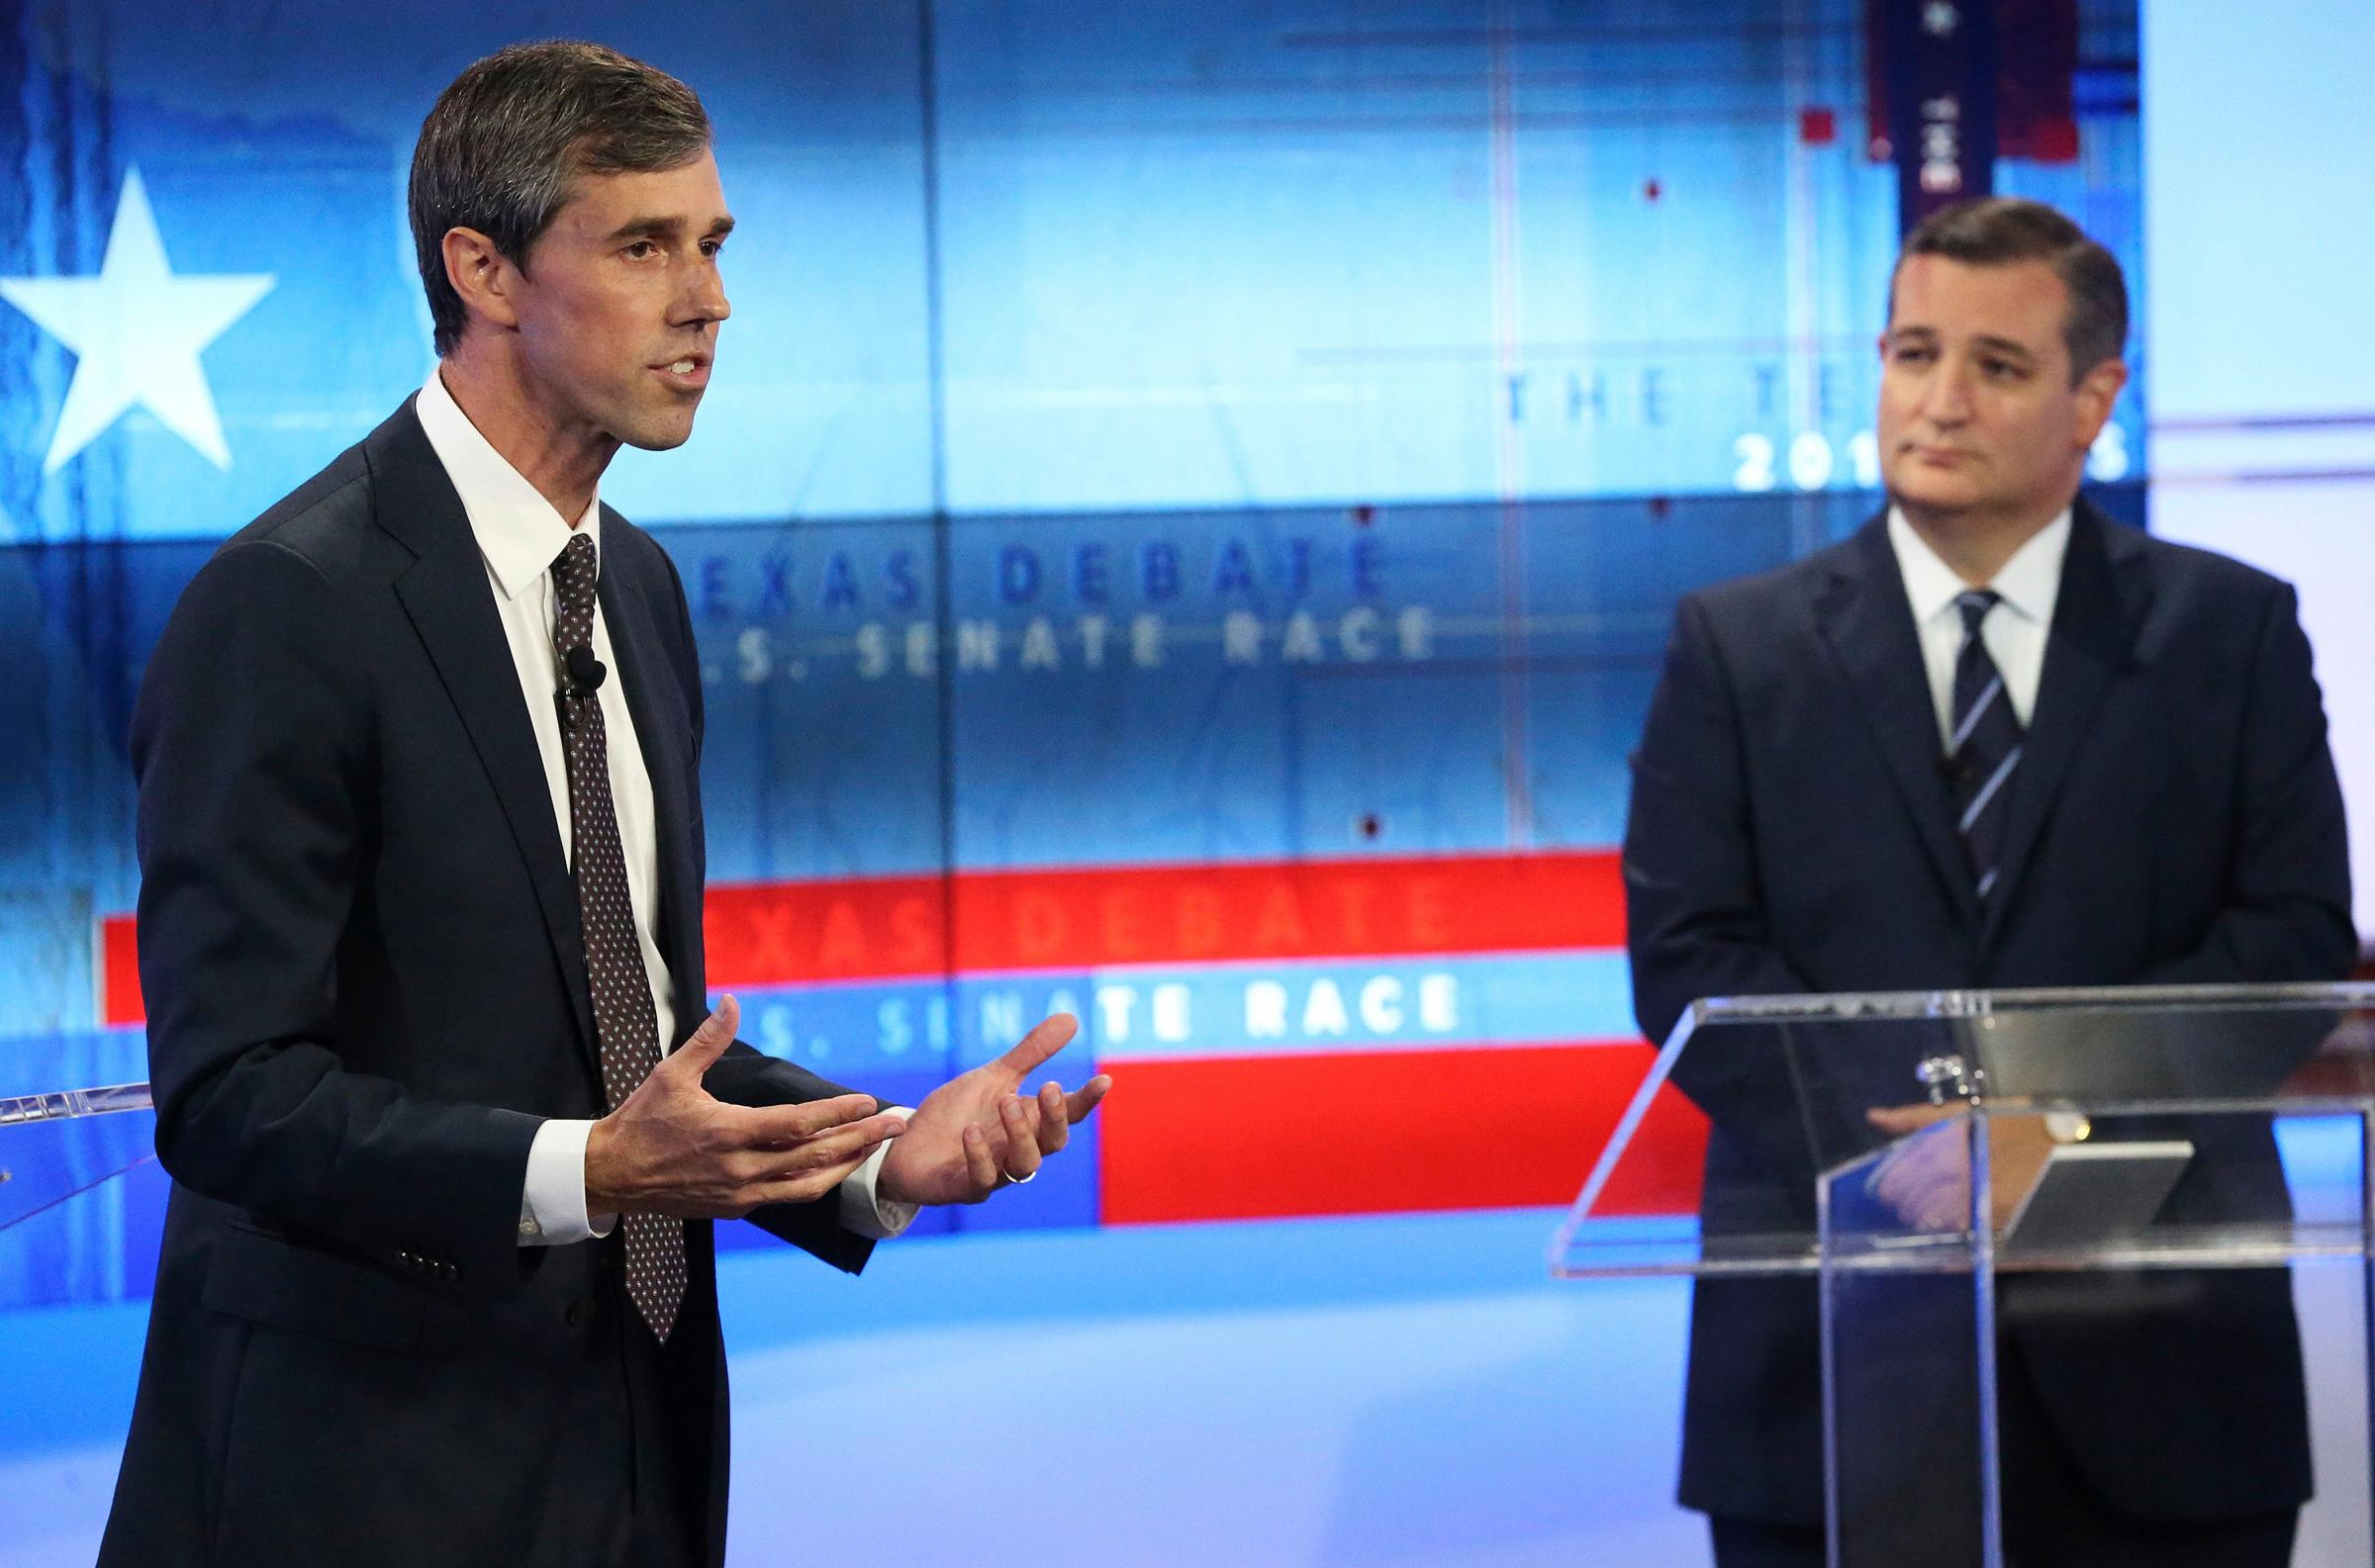 Candidate for the US Senate Beto O'Rourke and Senator Ted Cruz hold a debate in San Antonio, USA - 16 Oct 2018